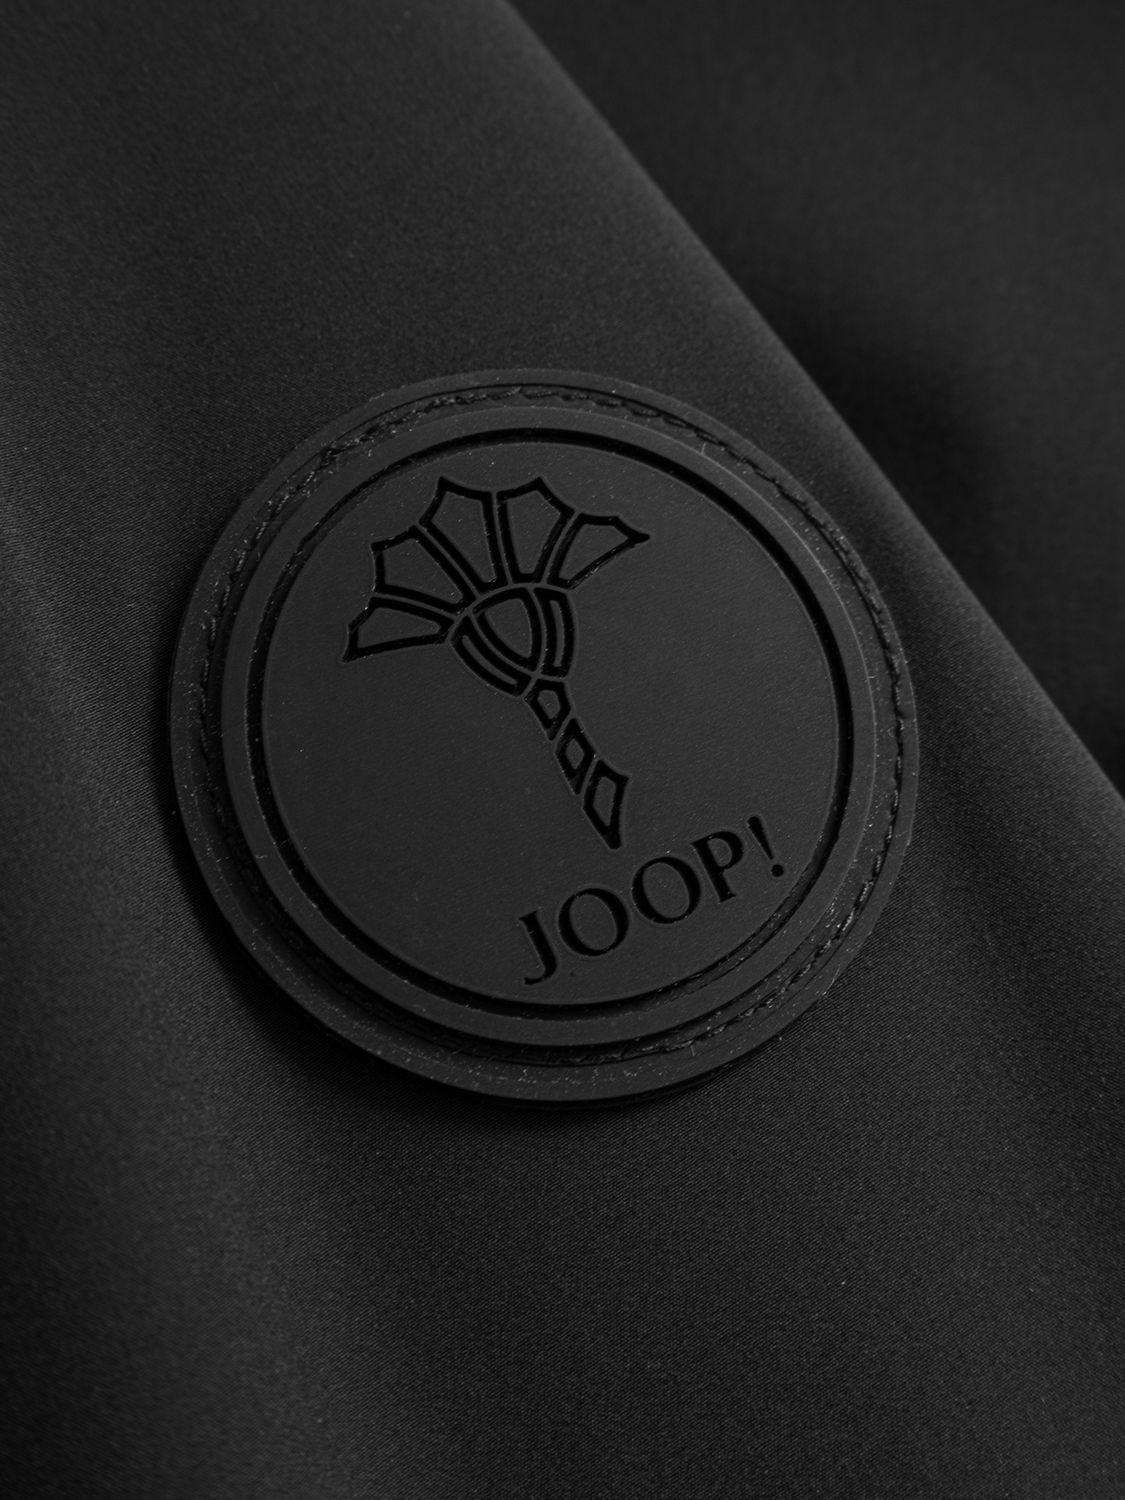 JOOP! Boros Puffer Jacket, Black, 38R